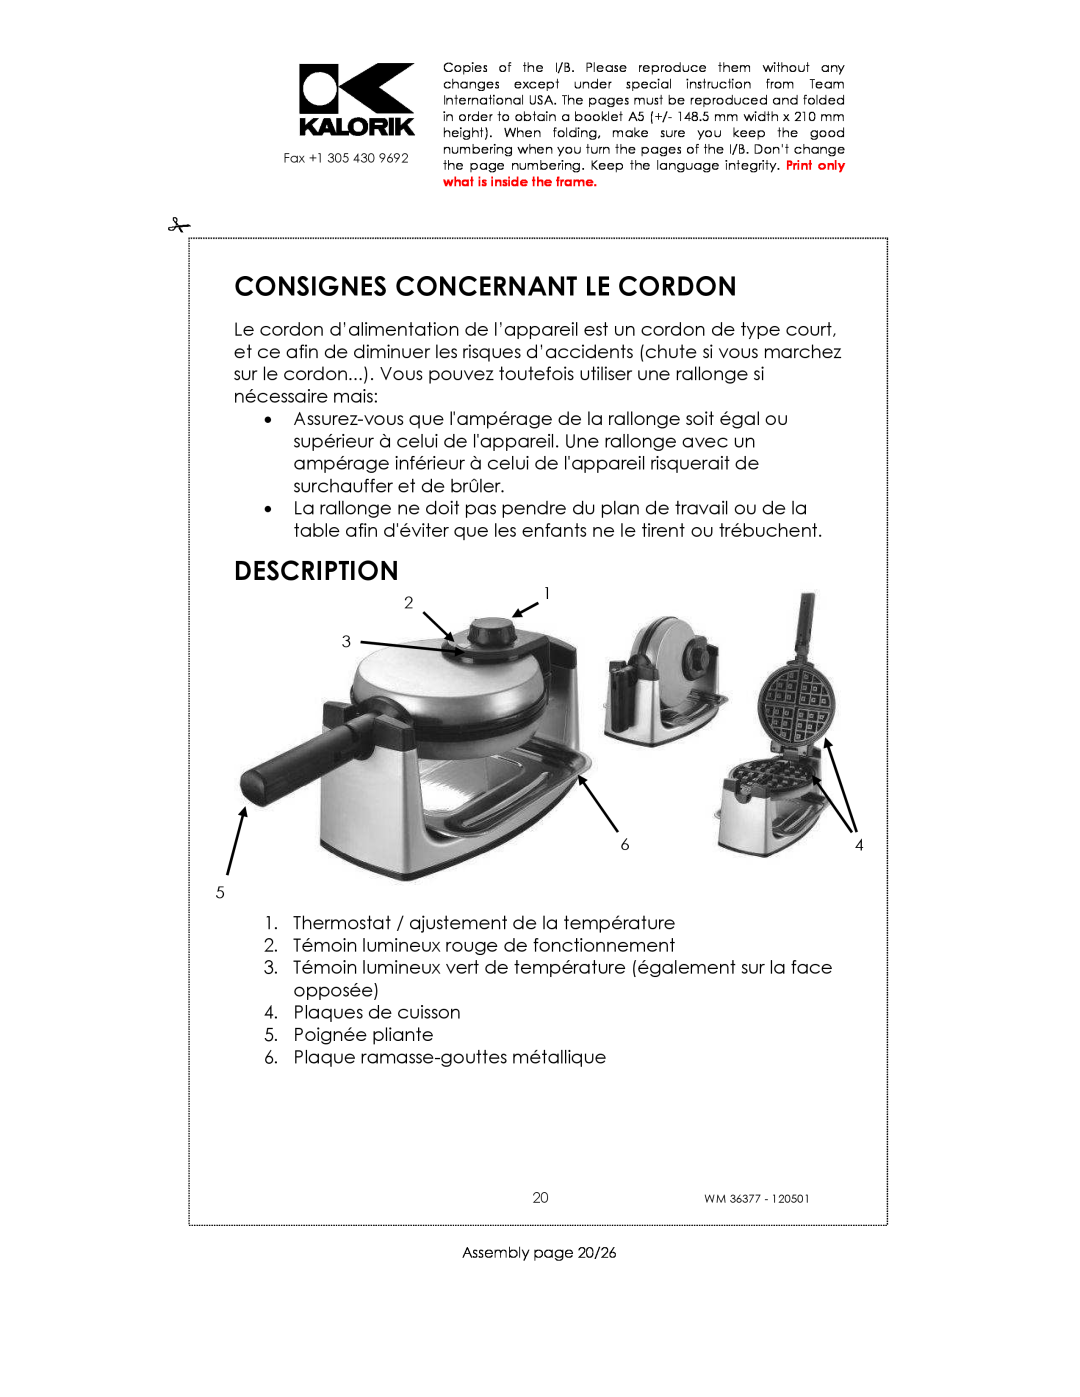 Kalorik WM 36377 manual Consignes Concernant Le Cordon, Description 